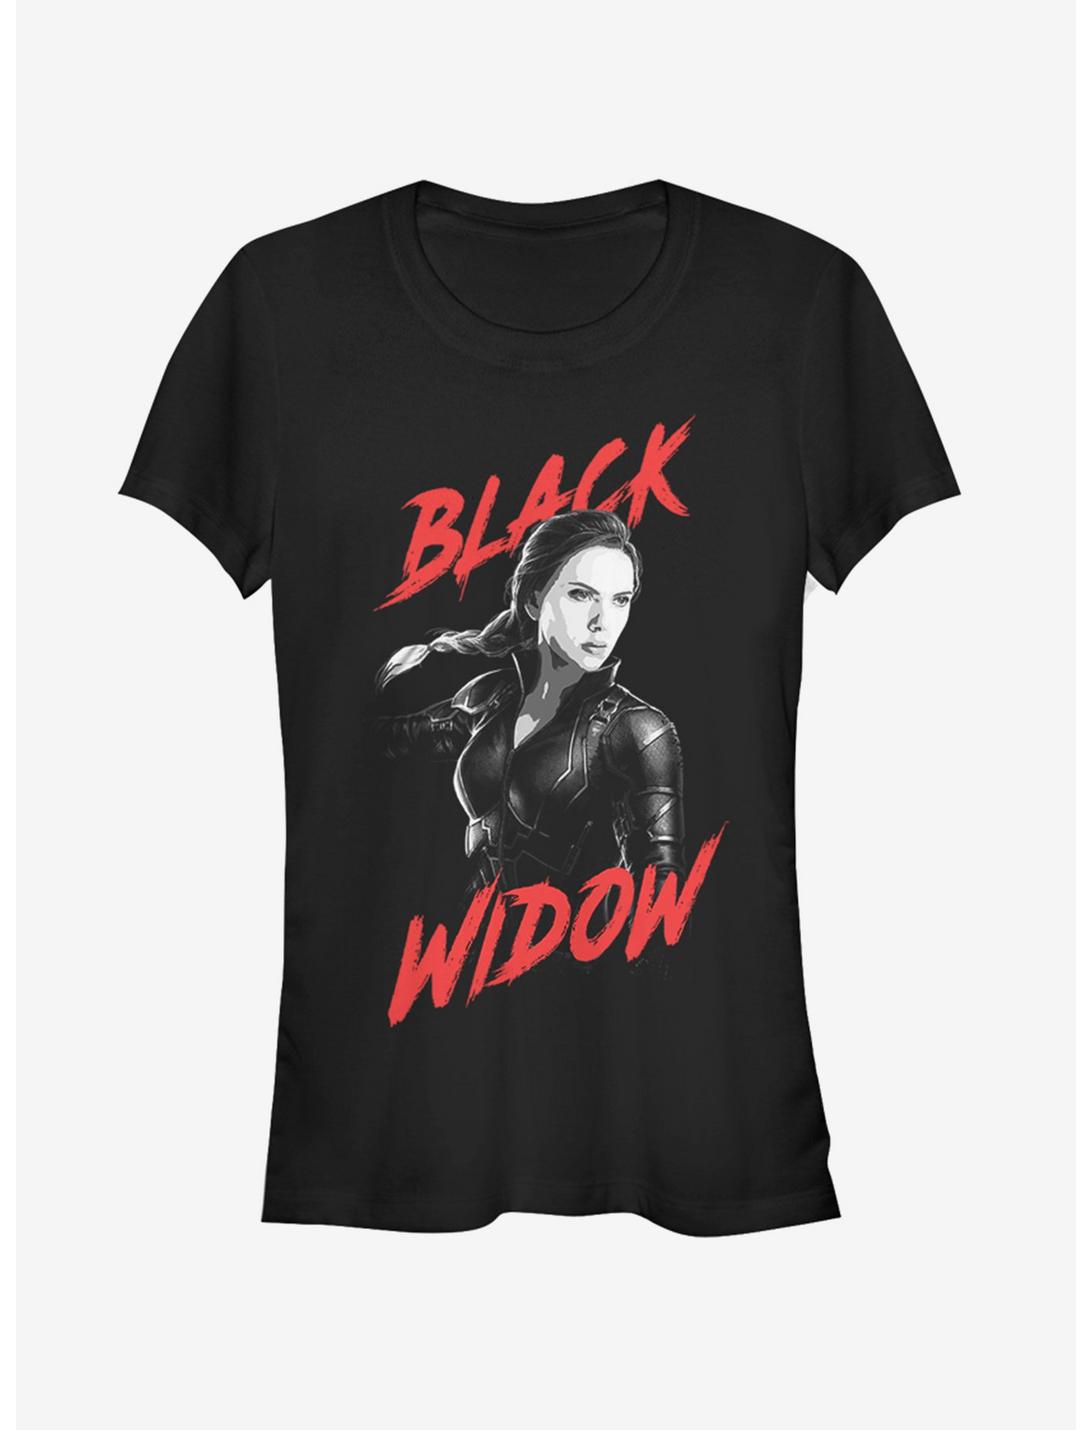 Marvel Avengers: Endgame High Contrast Black Widow Girls T-Shirt, BLACK, hi-res